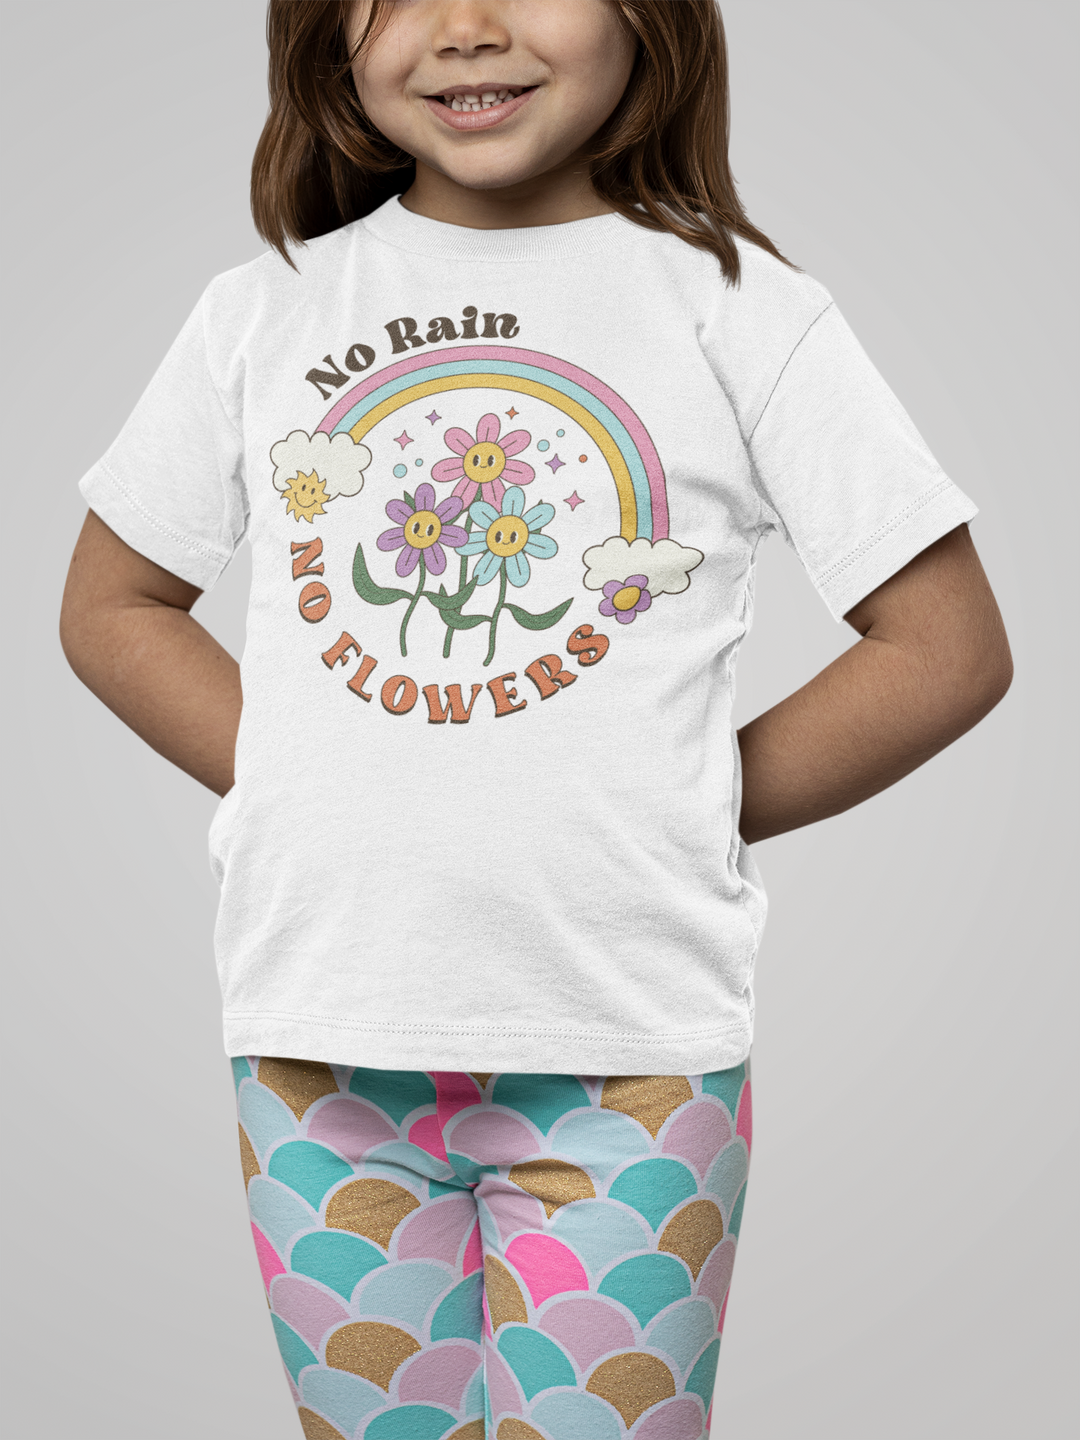 No Rain No Flowers. Short Sleeve T Shirt For Toddler And Kids. - TeesForToddlersandKids -  t-shirt - positive - no-rain-no-flowers-short-sleeve-t-shirt-for-toddler-and-kids